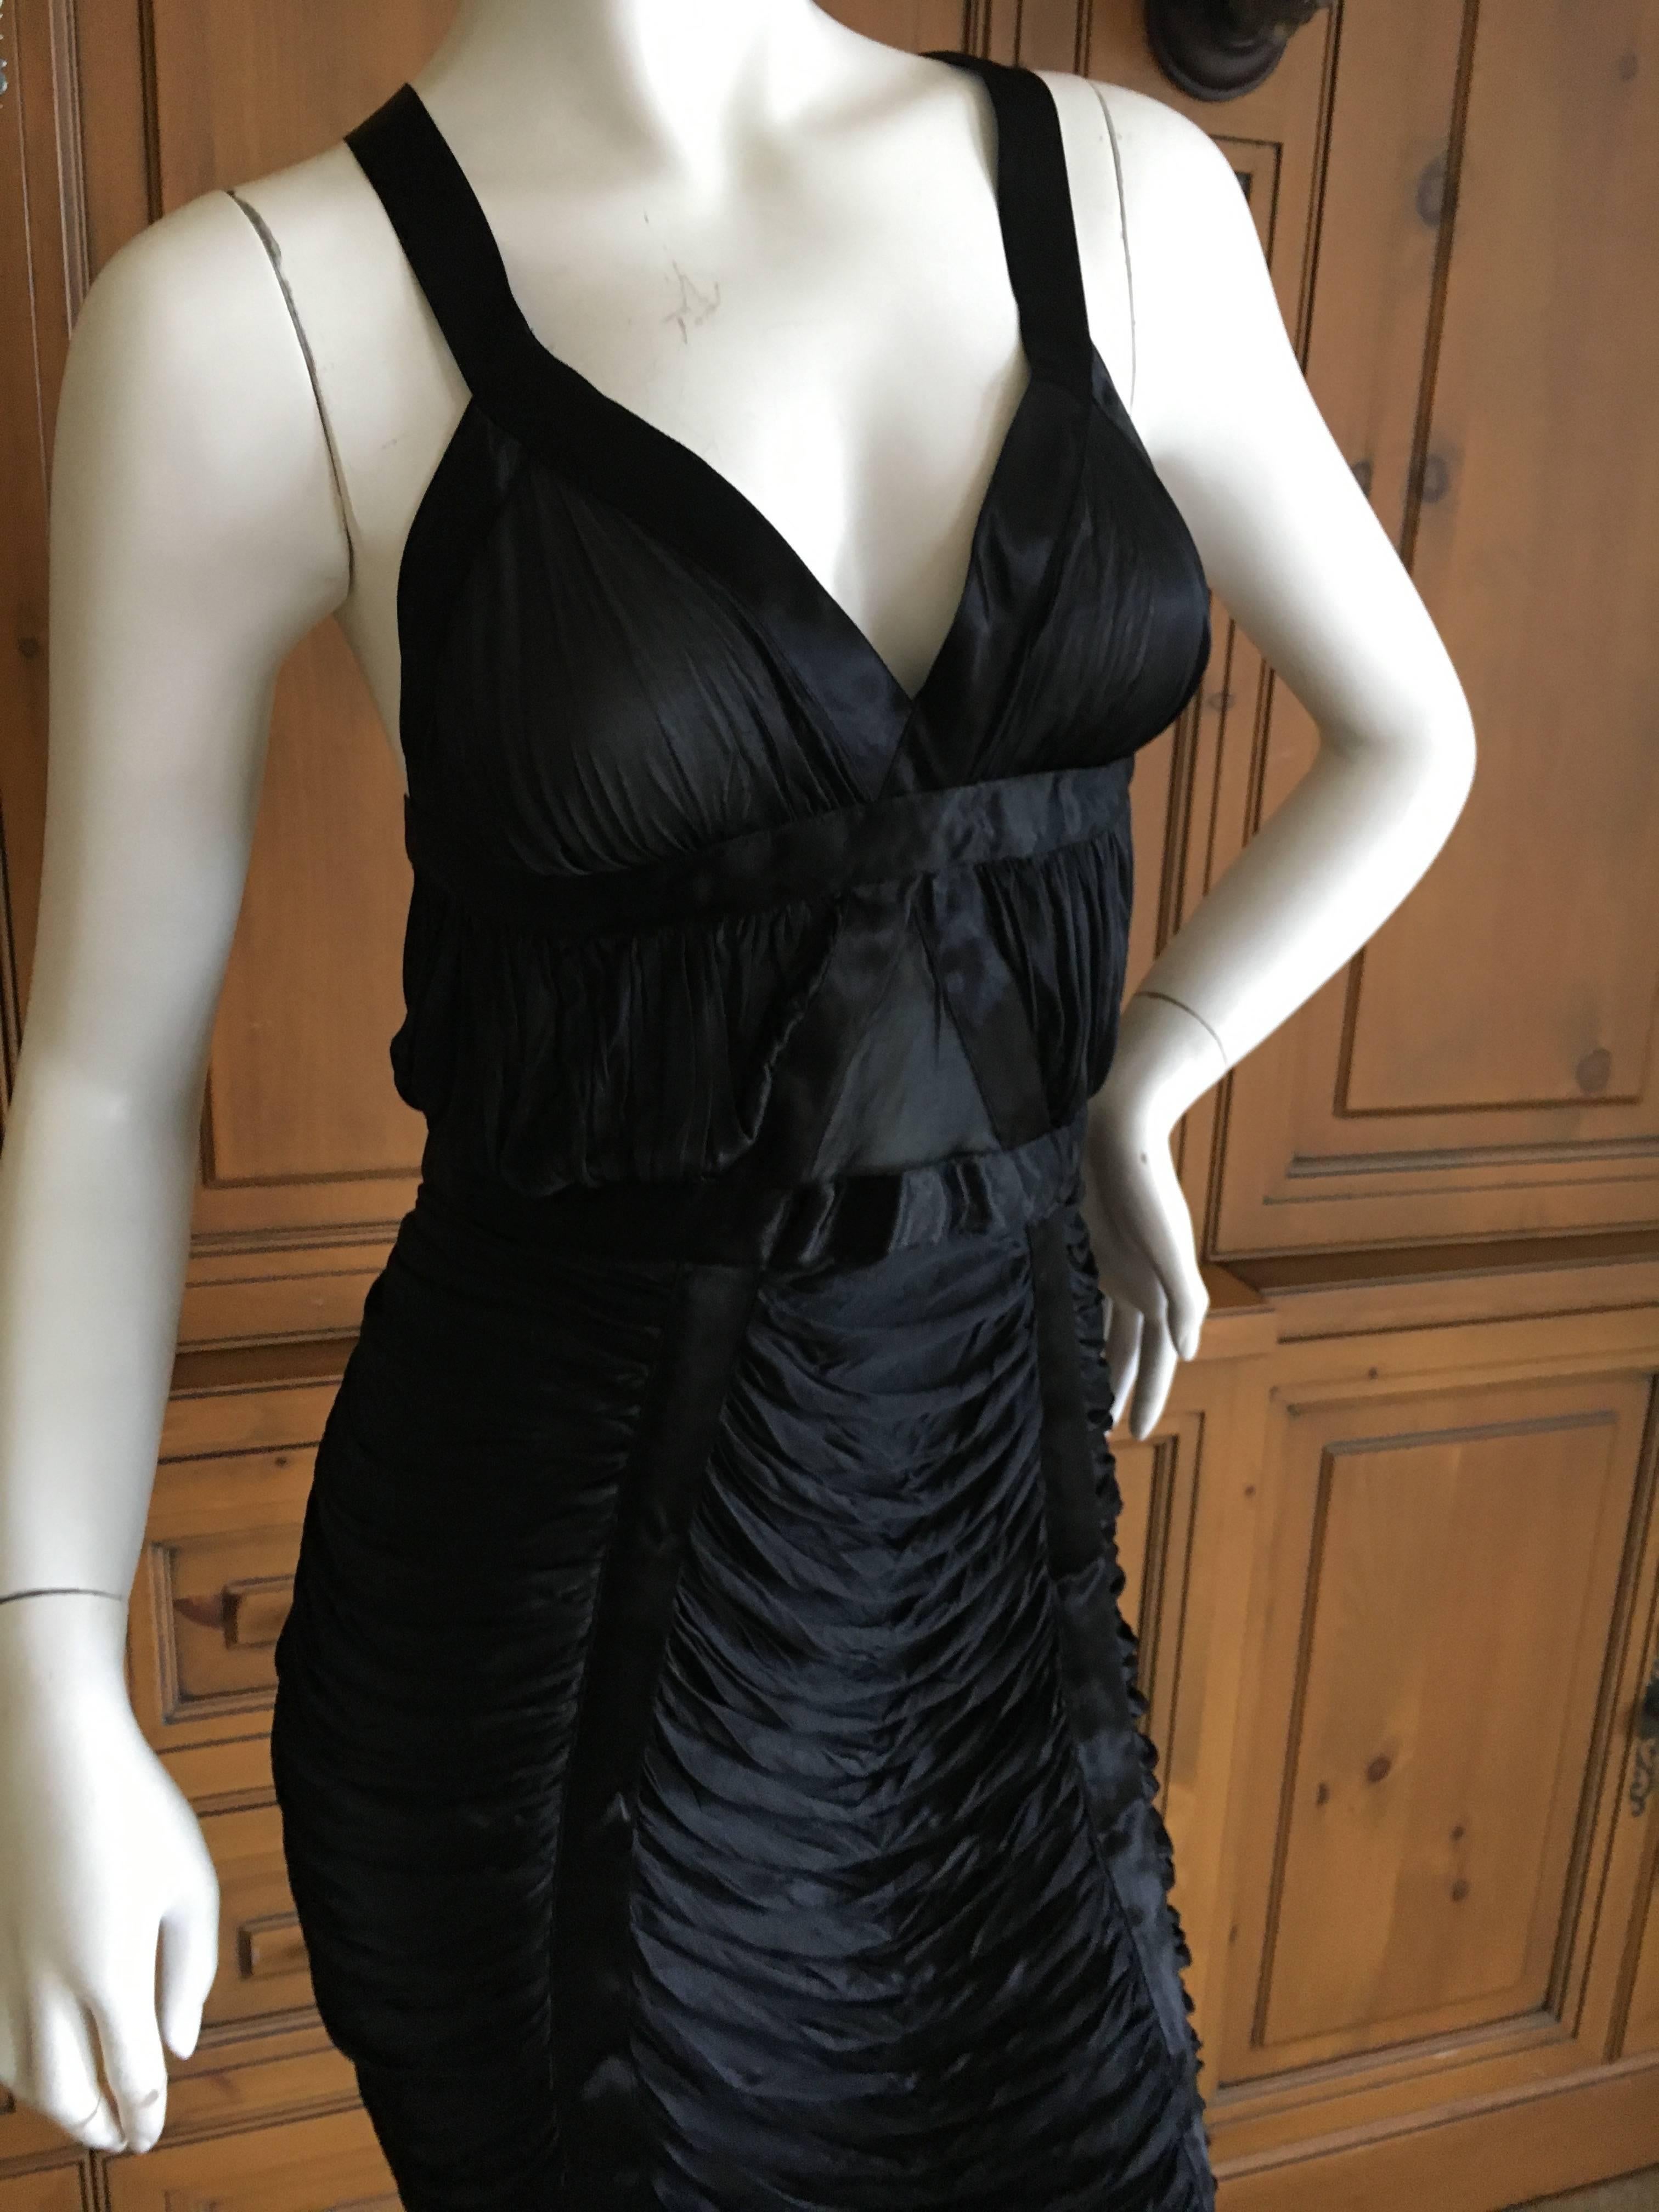 Yves Saint Laurent by Tom Ford Black Draped Cocktail Dress 2003  1